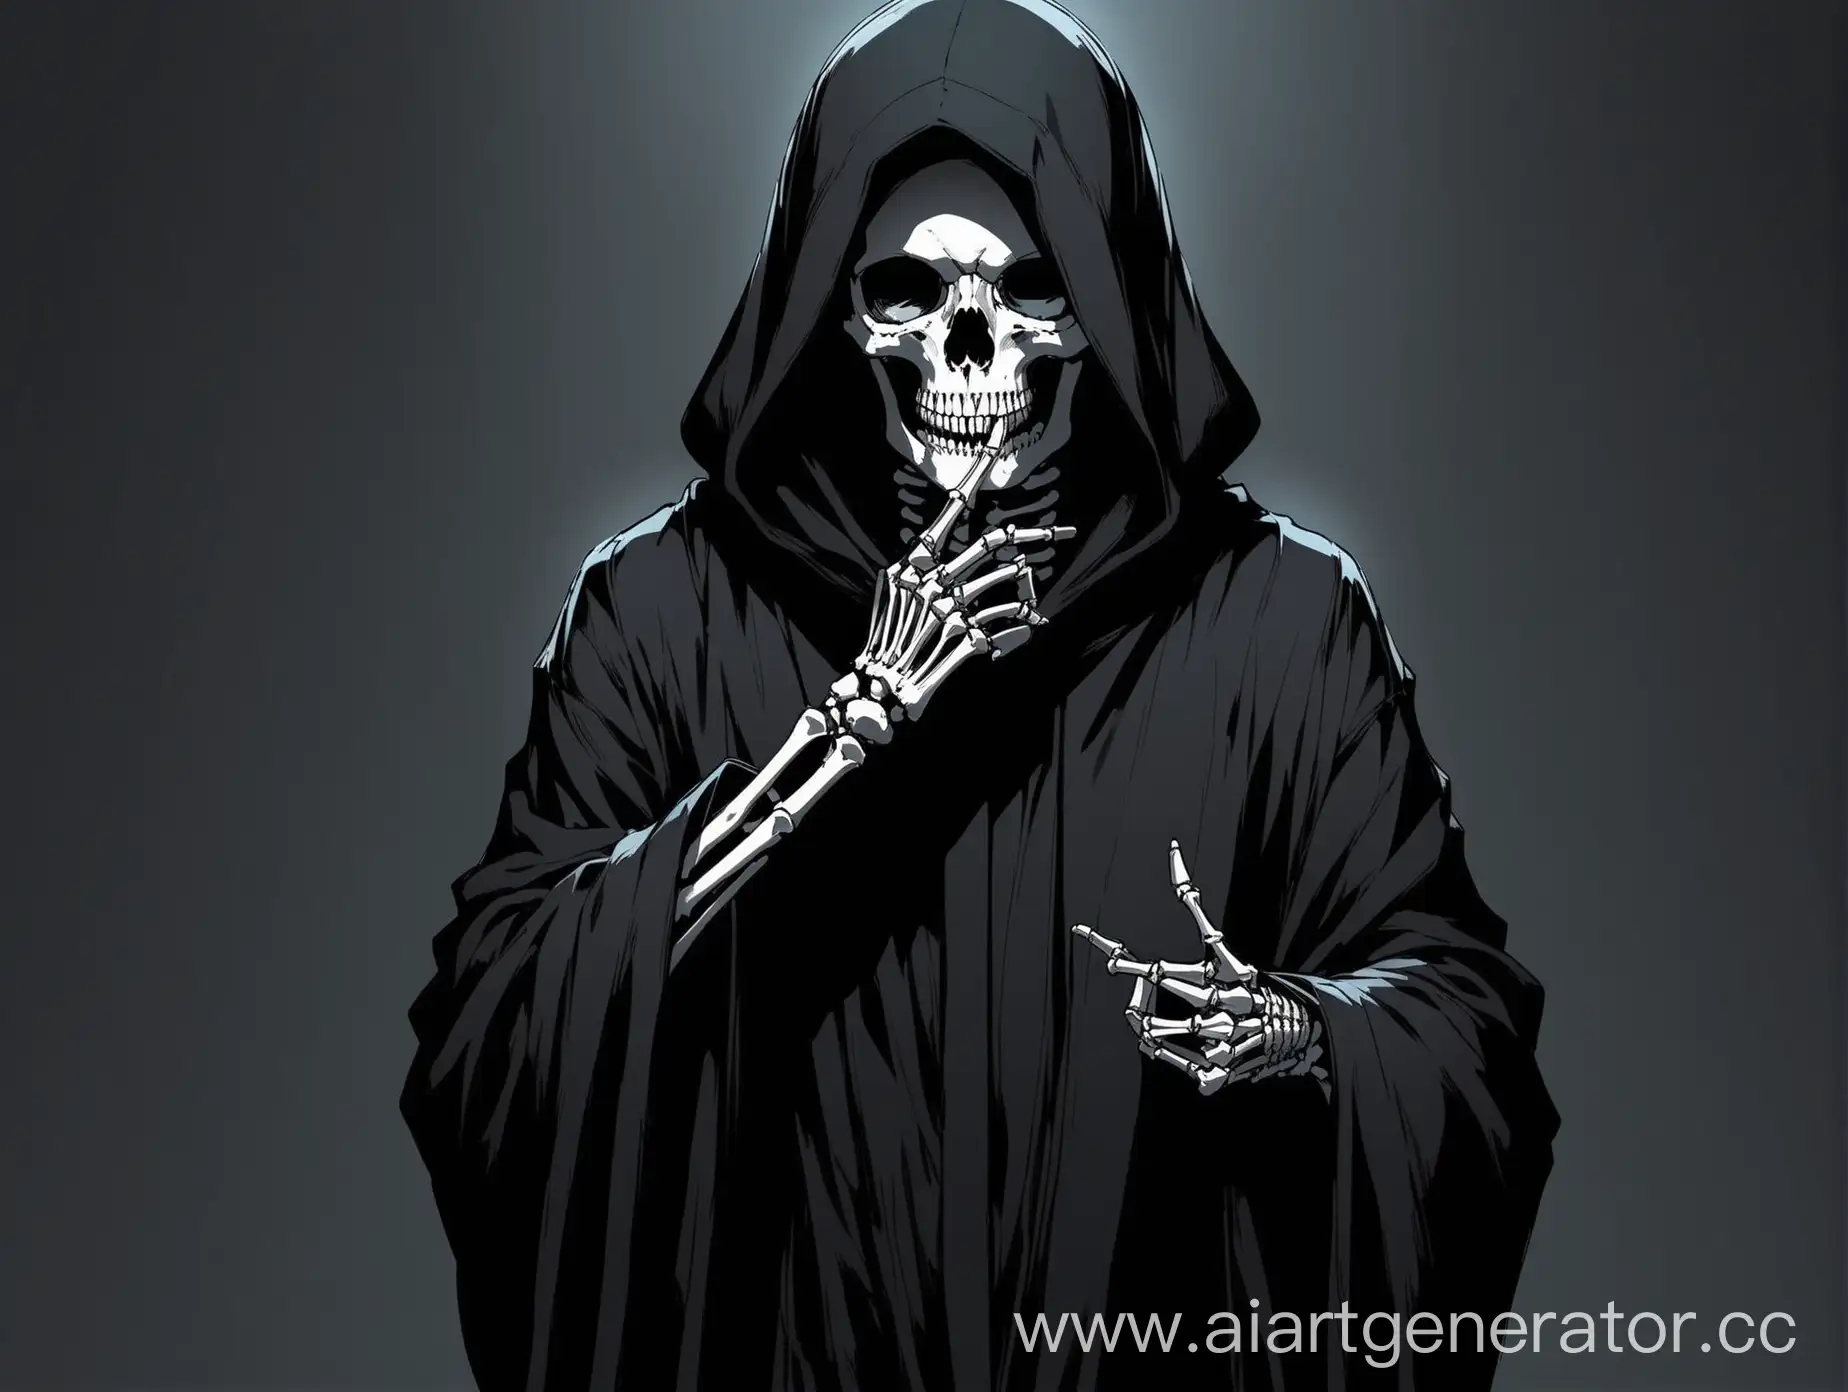 Silent-Skeleton-in-Black-Robe-Gesturing-for-Silence